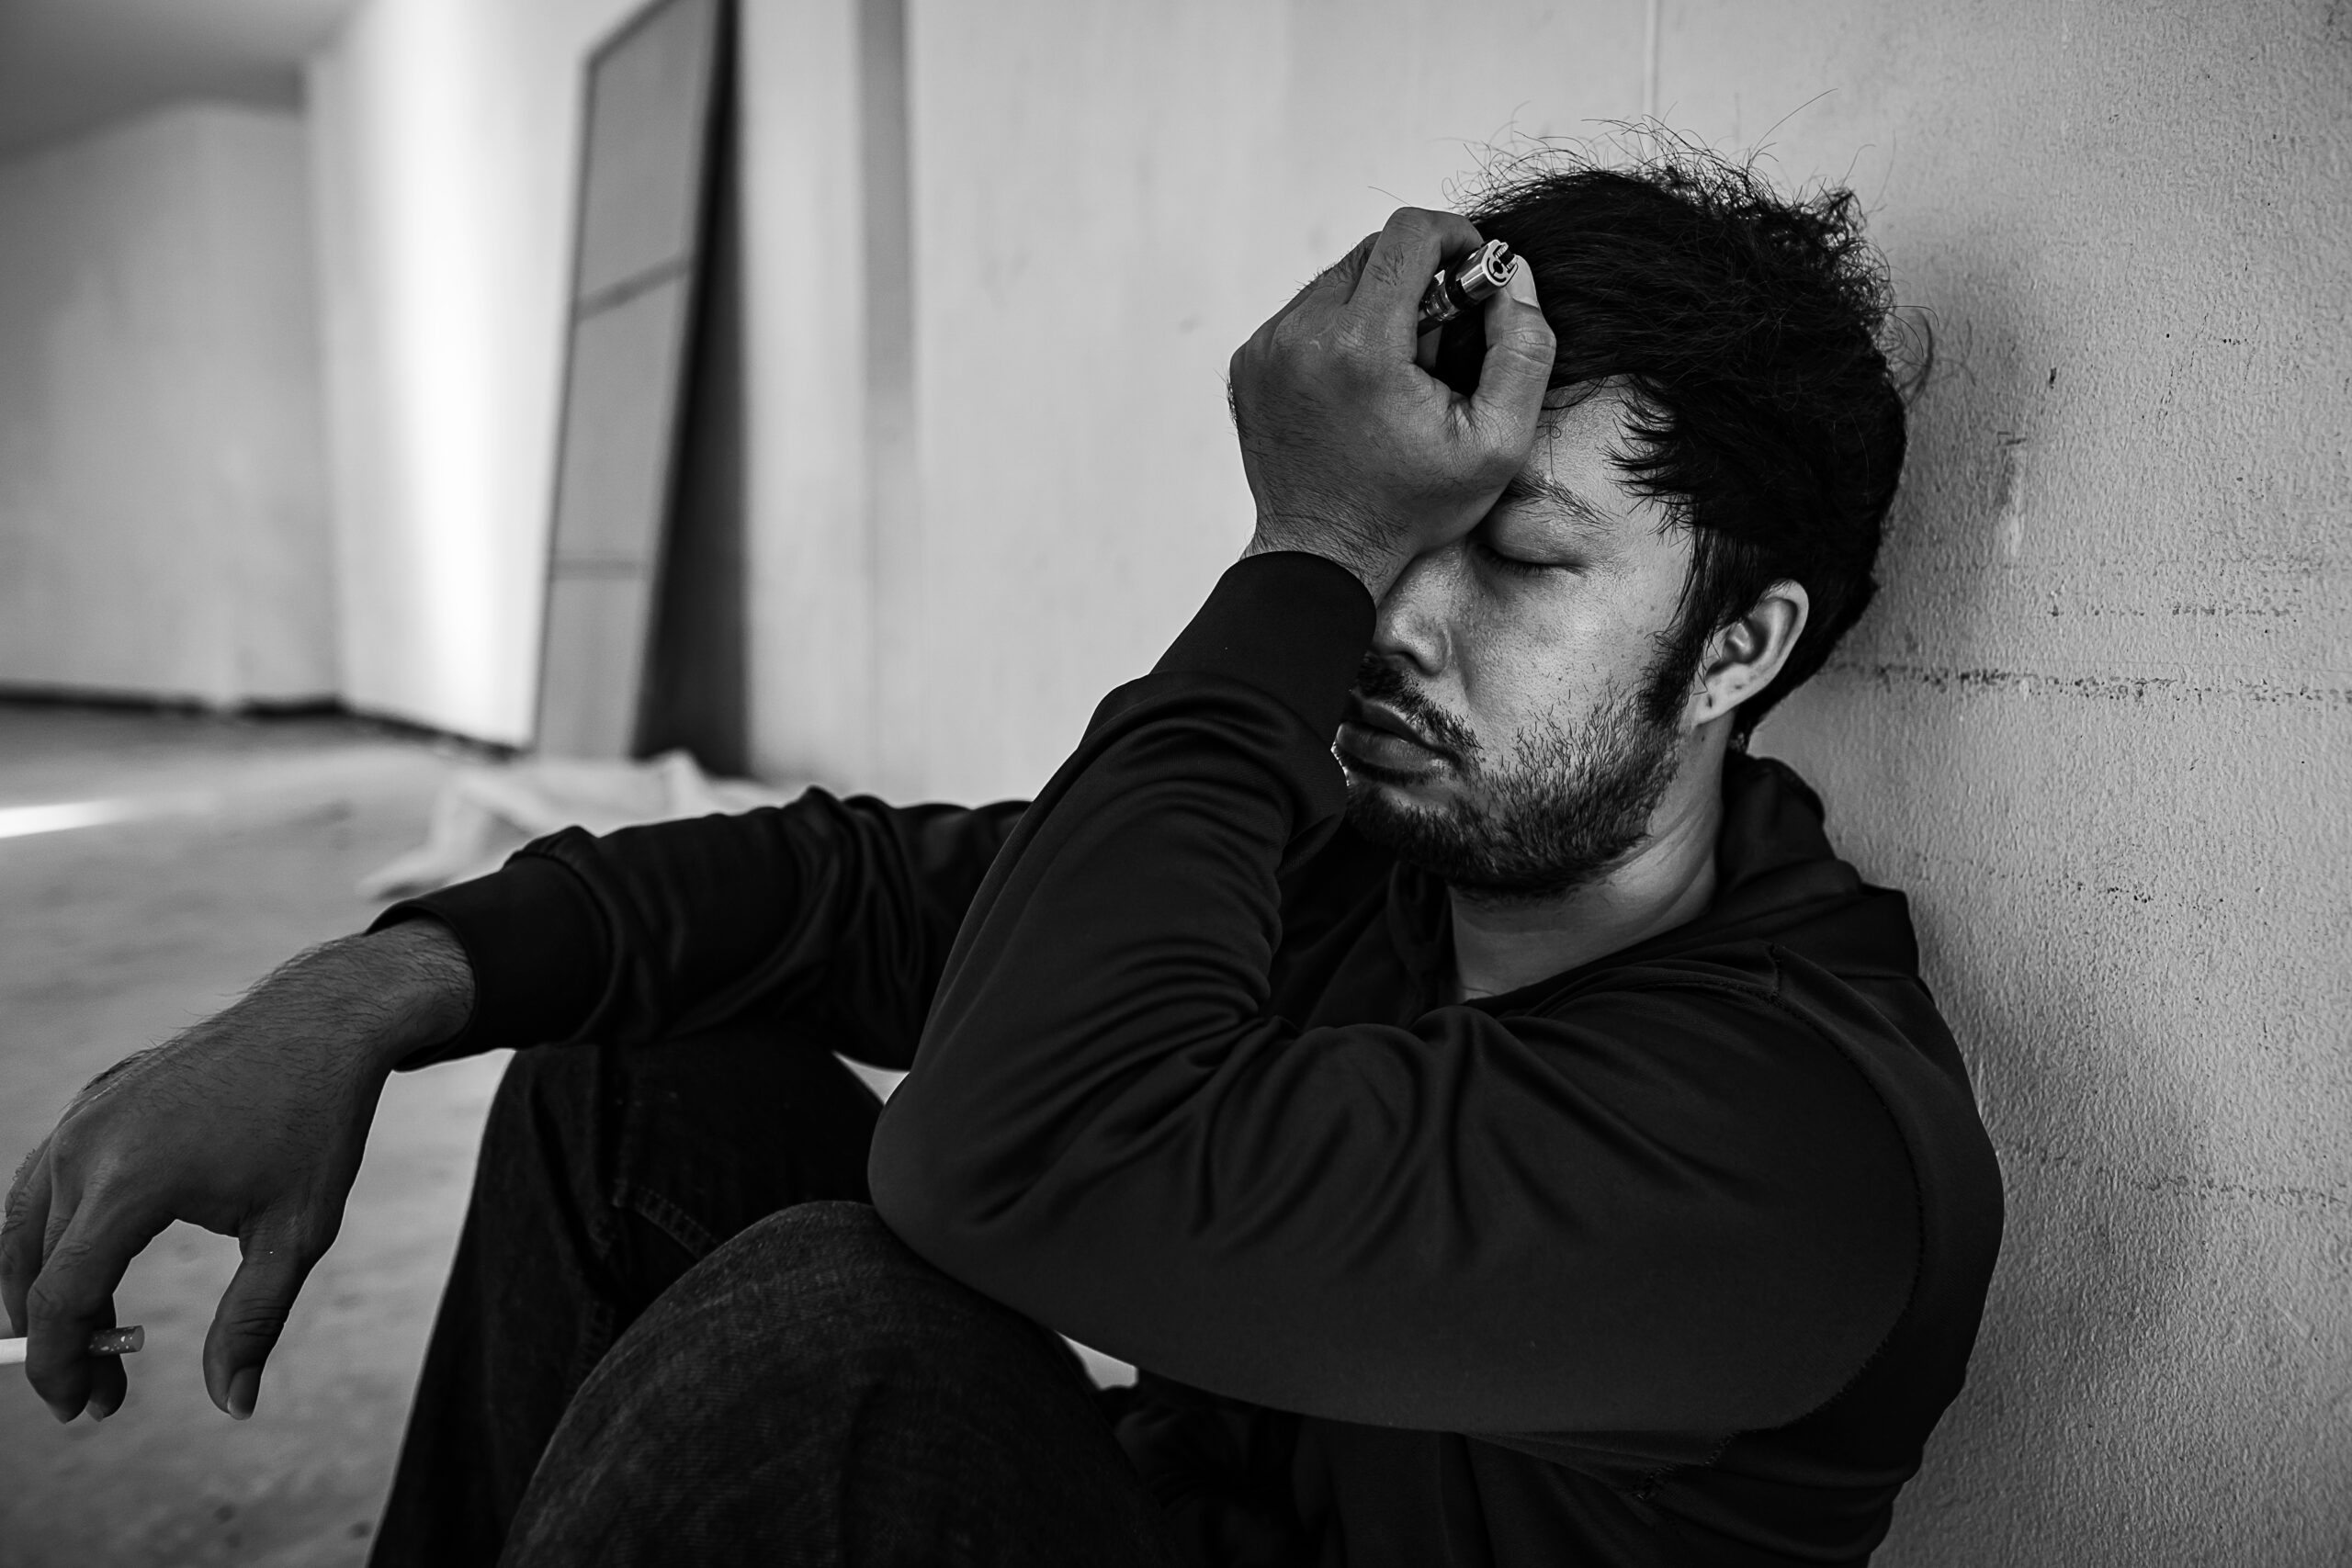 Men addicted with severe depression